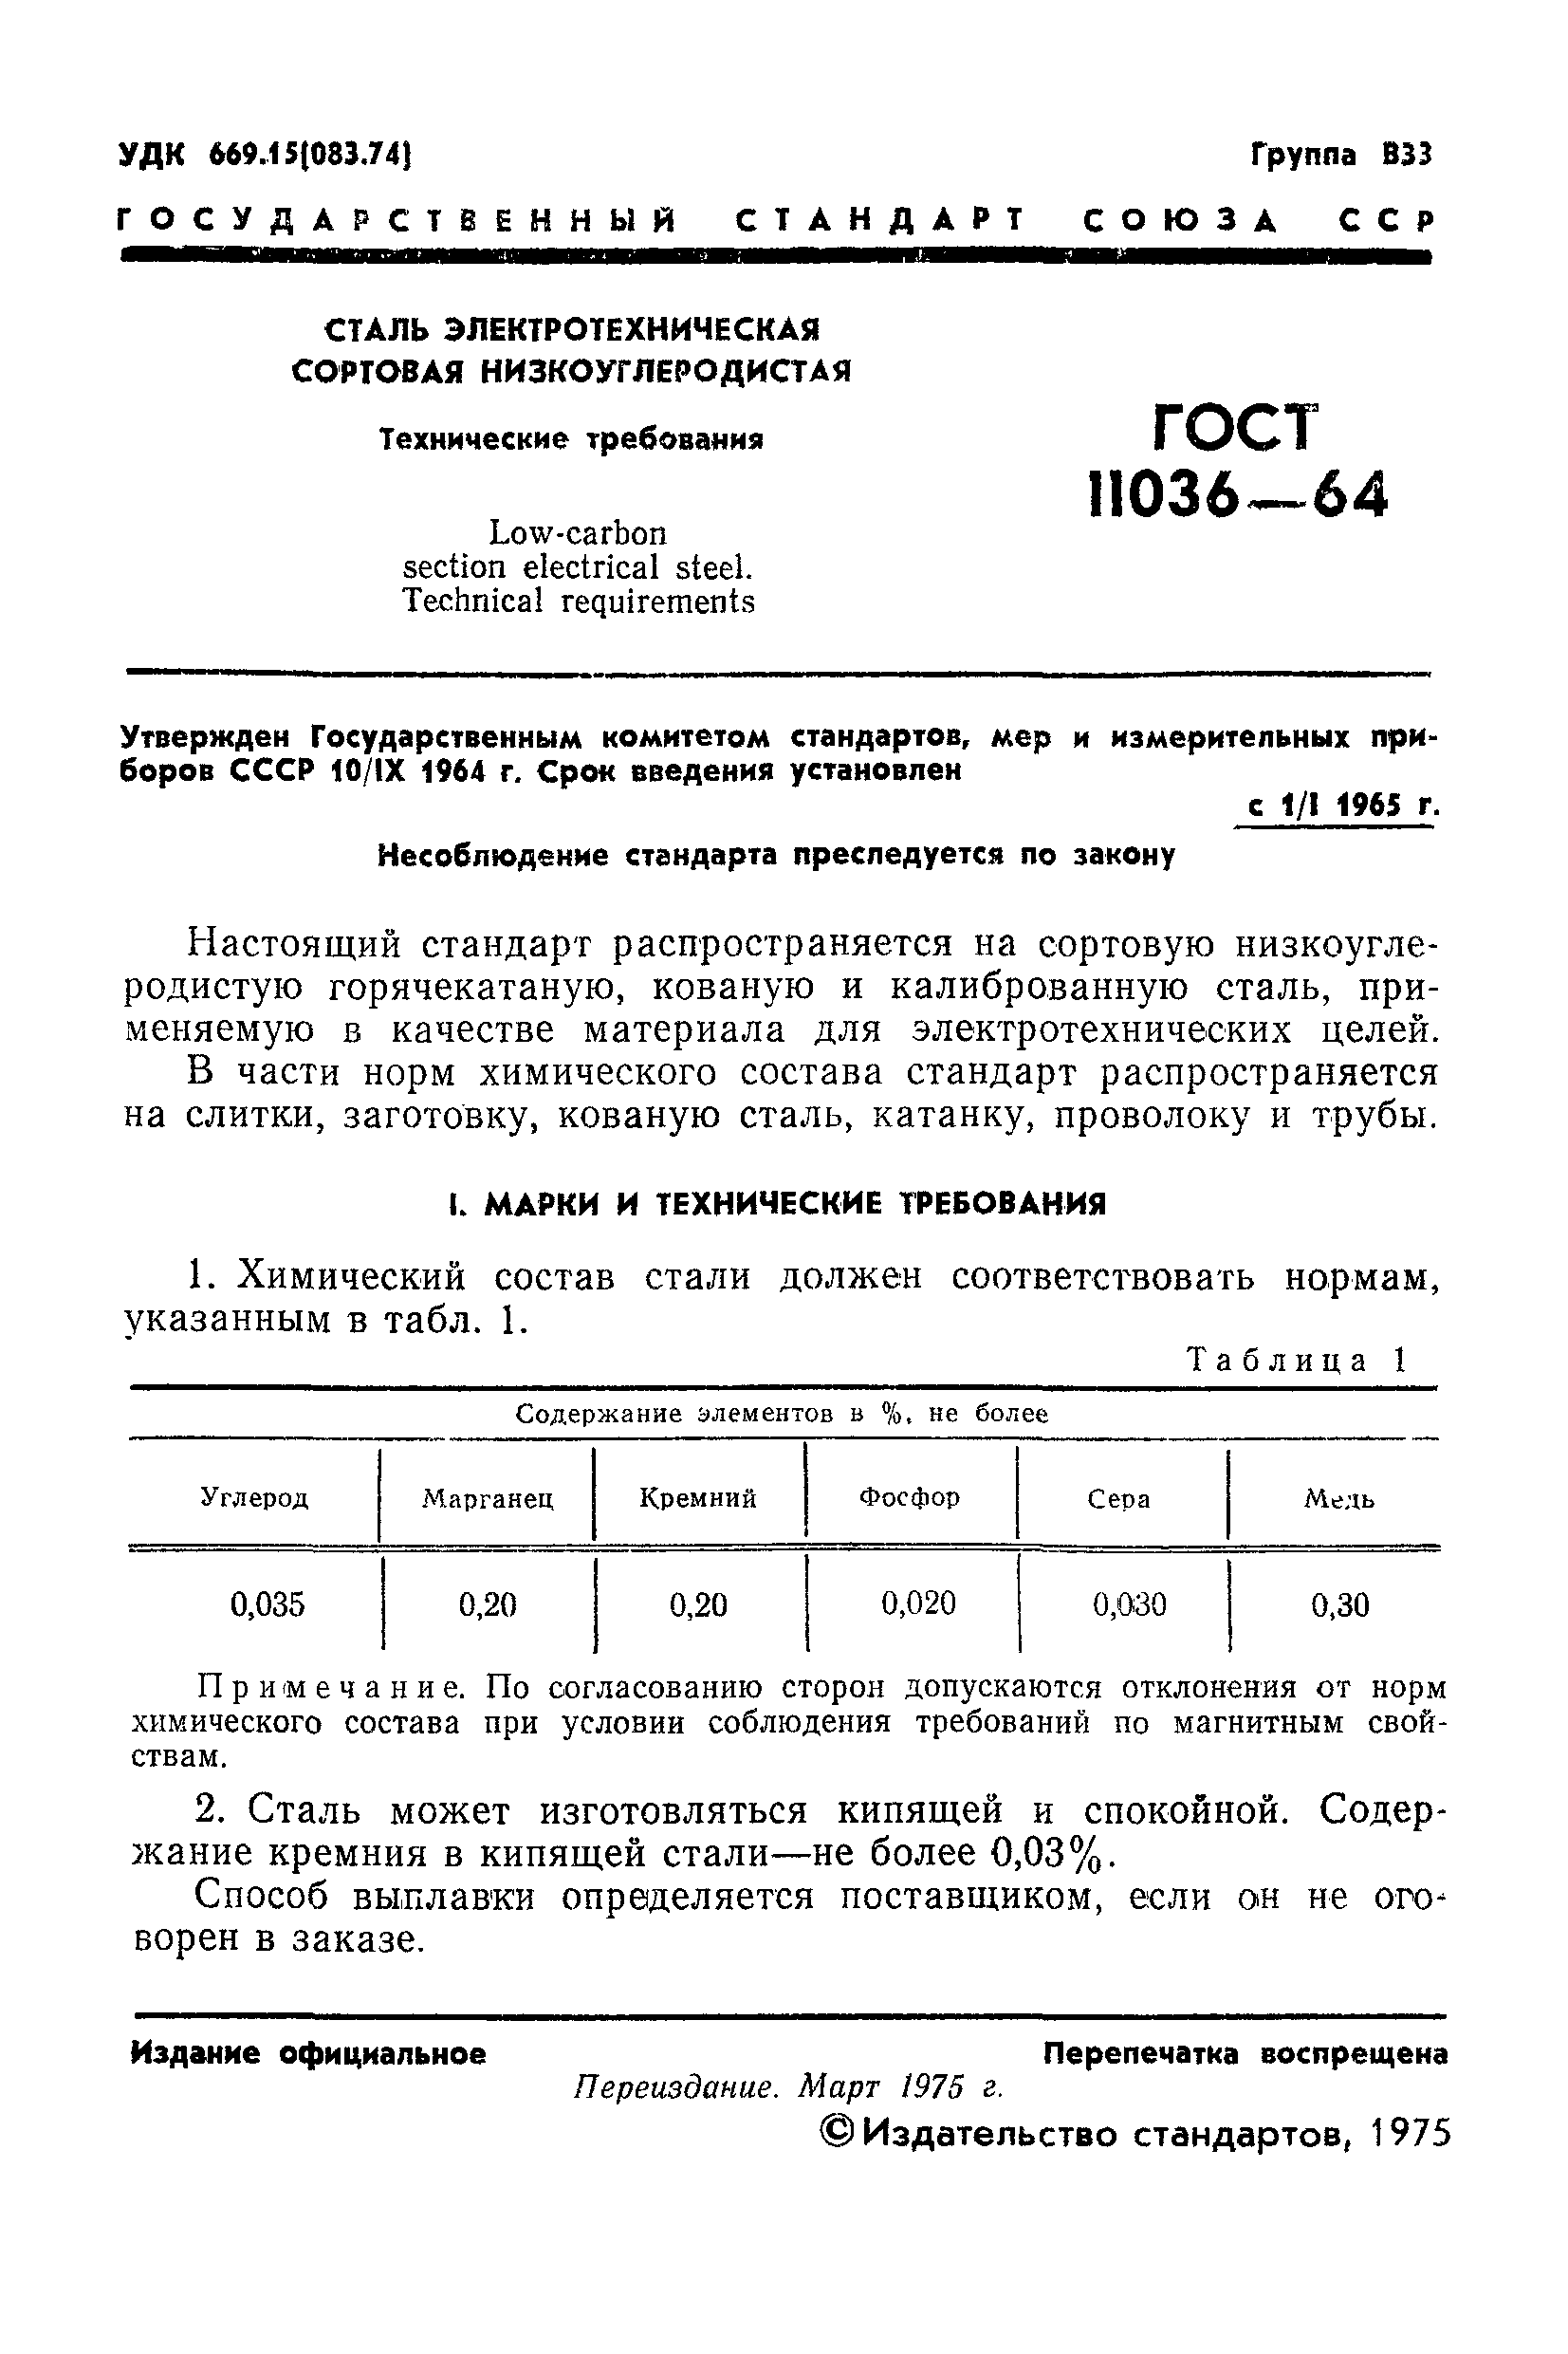 ГОСТ 11036-64